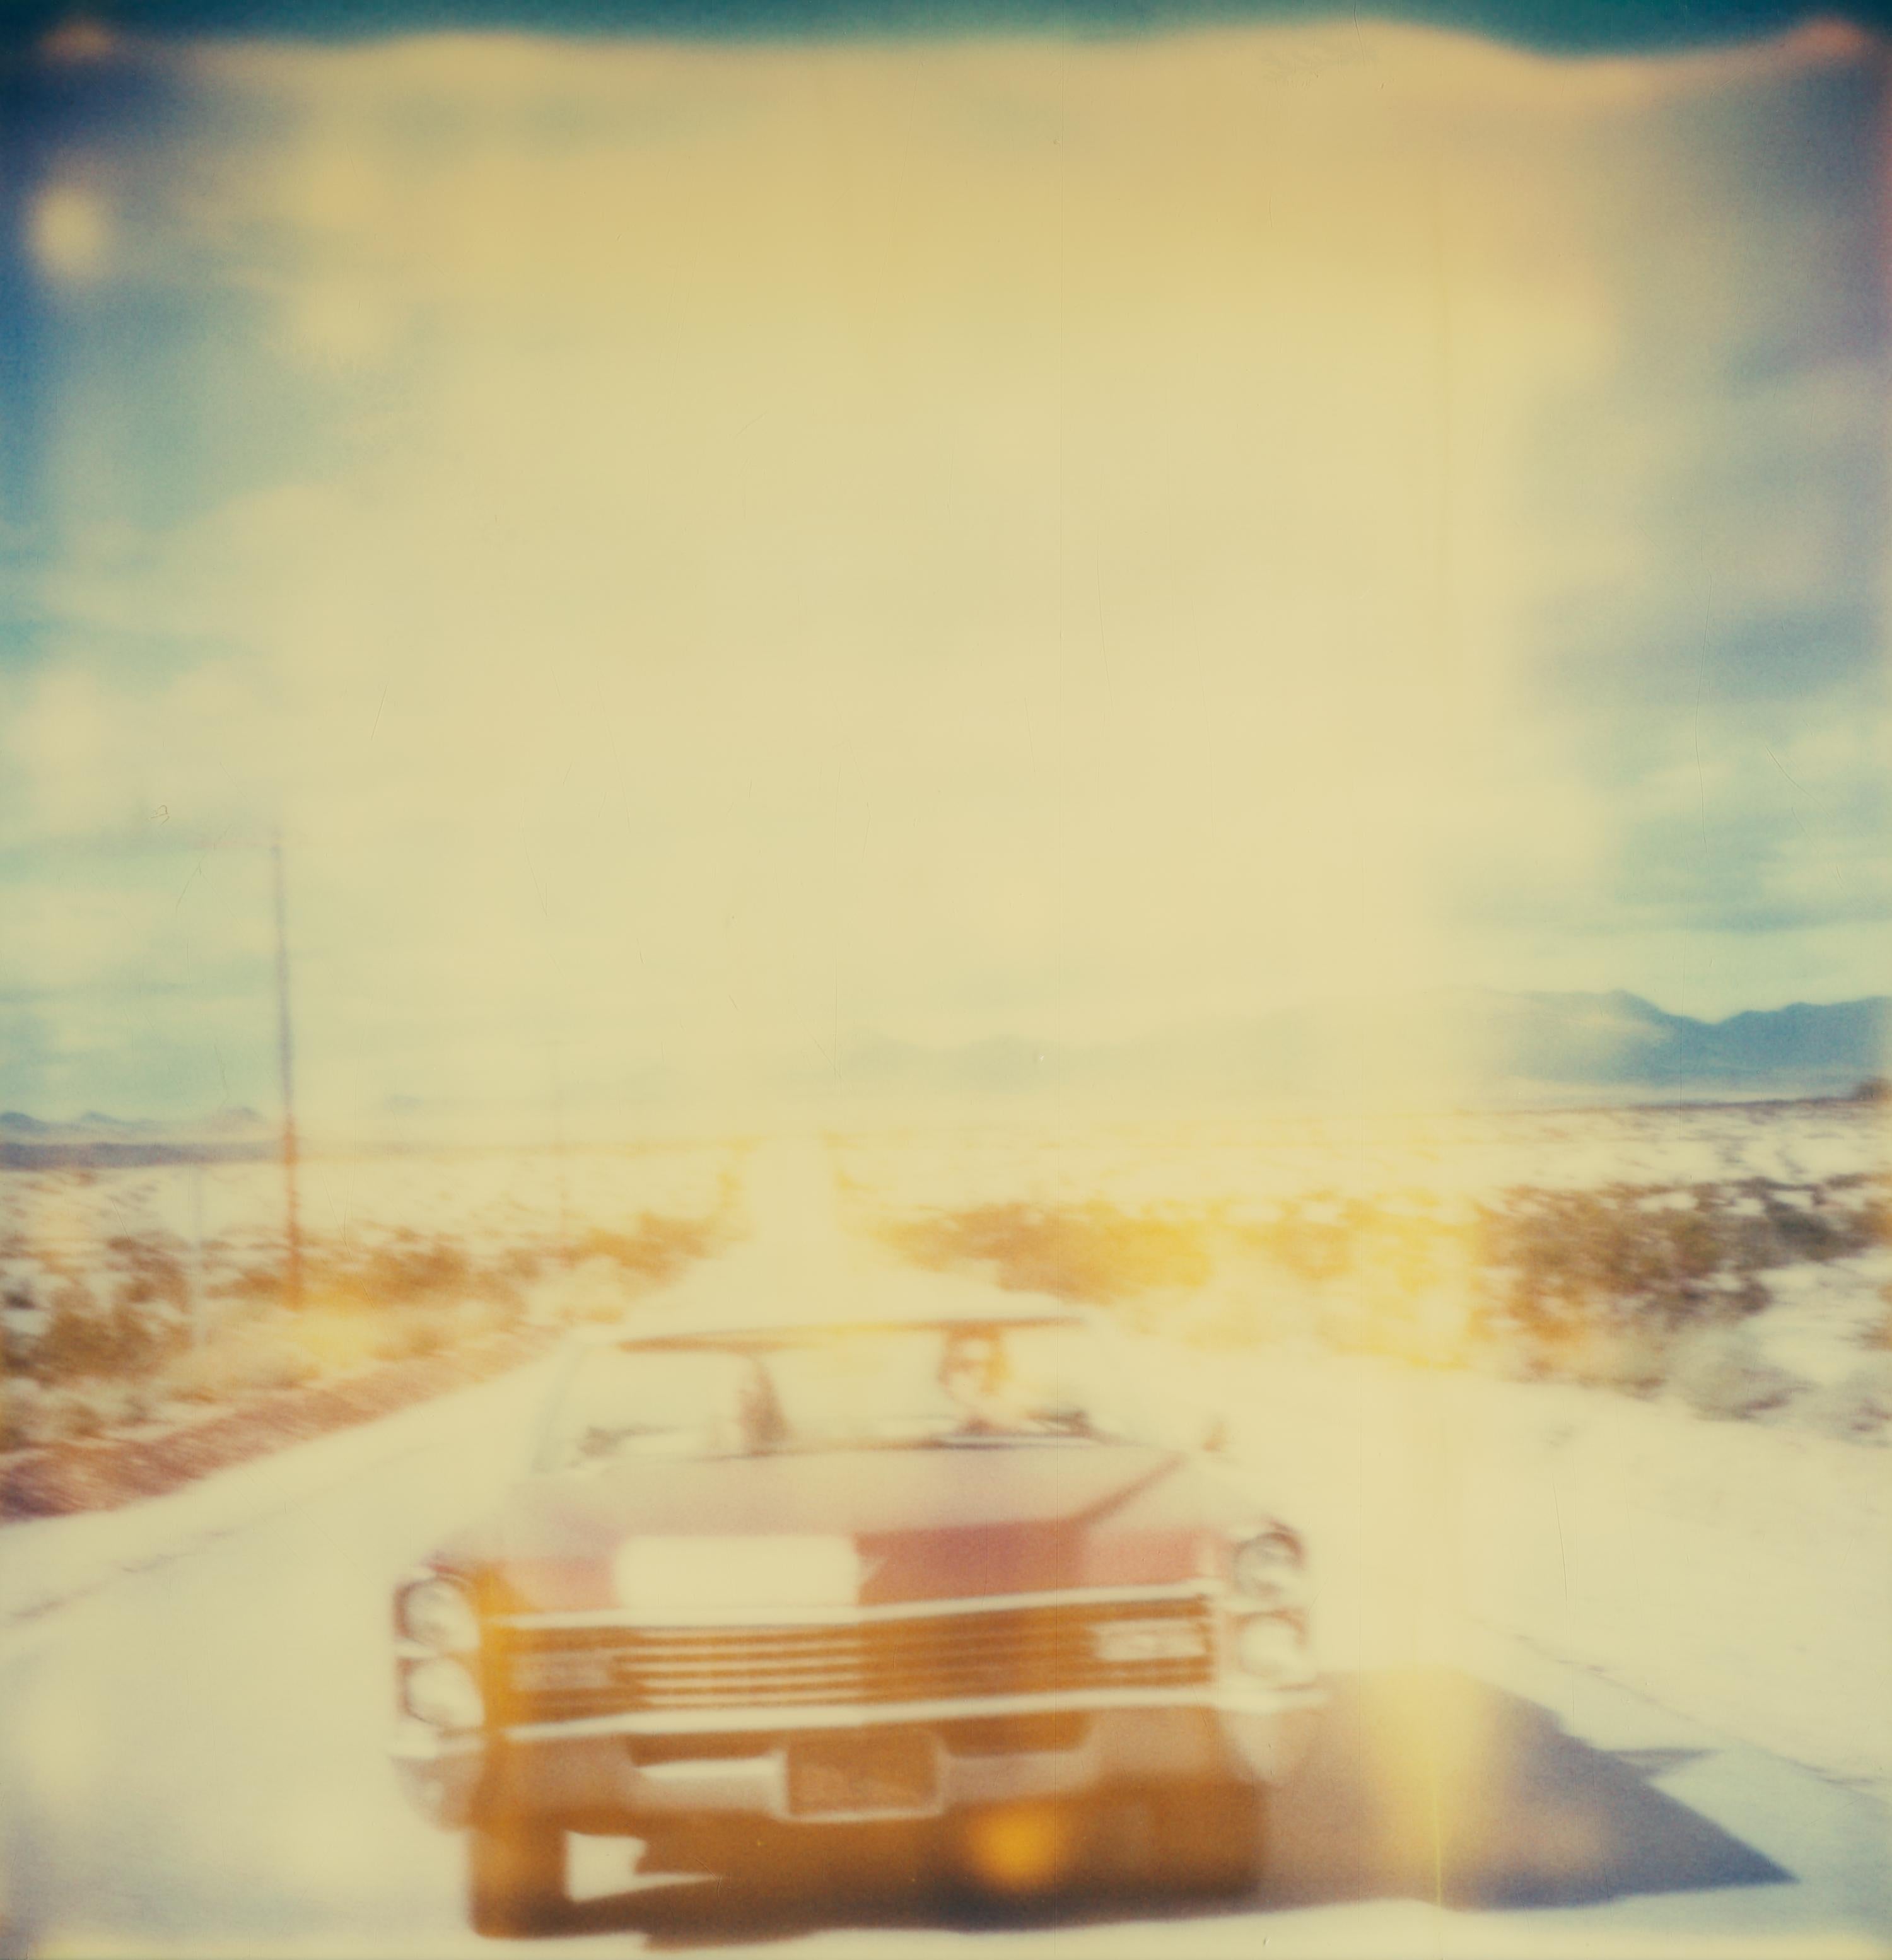 Stefanie Schneider Landscape Photograph - Leaving Town (Sidewinder) - based on a Polaroid